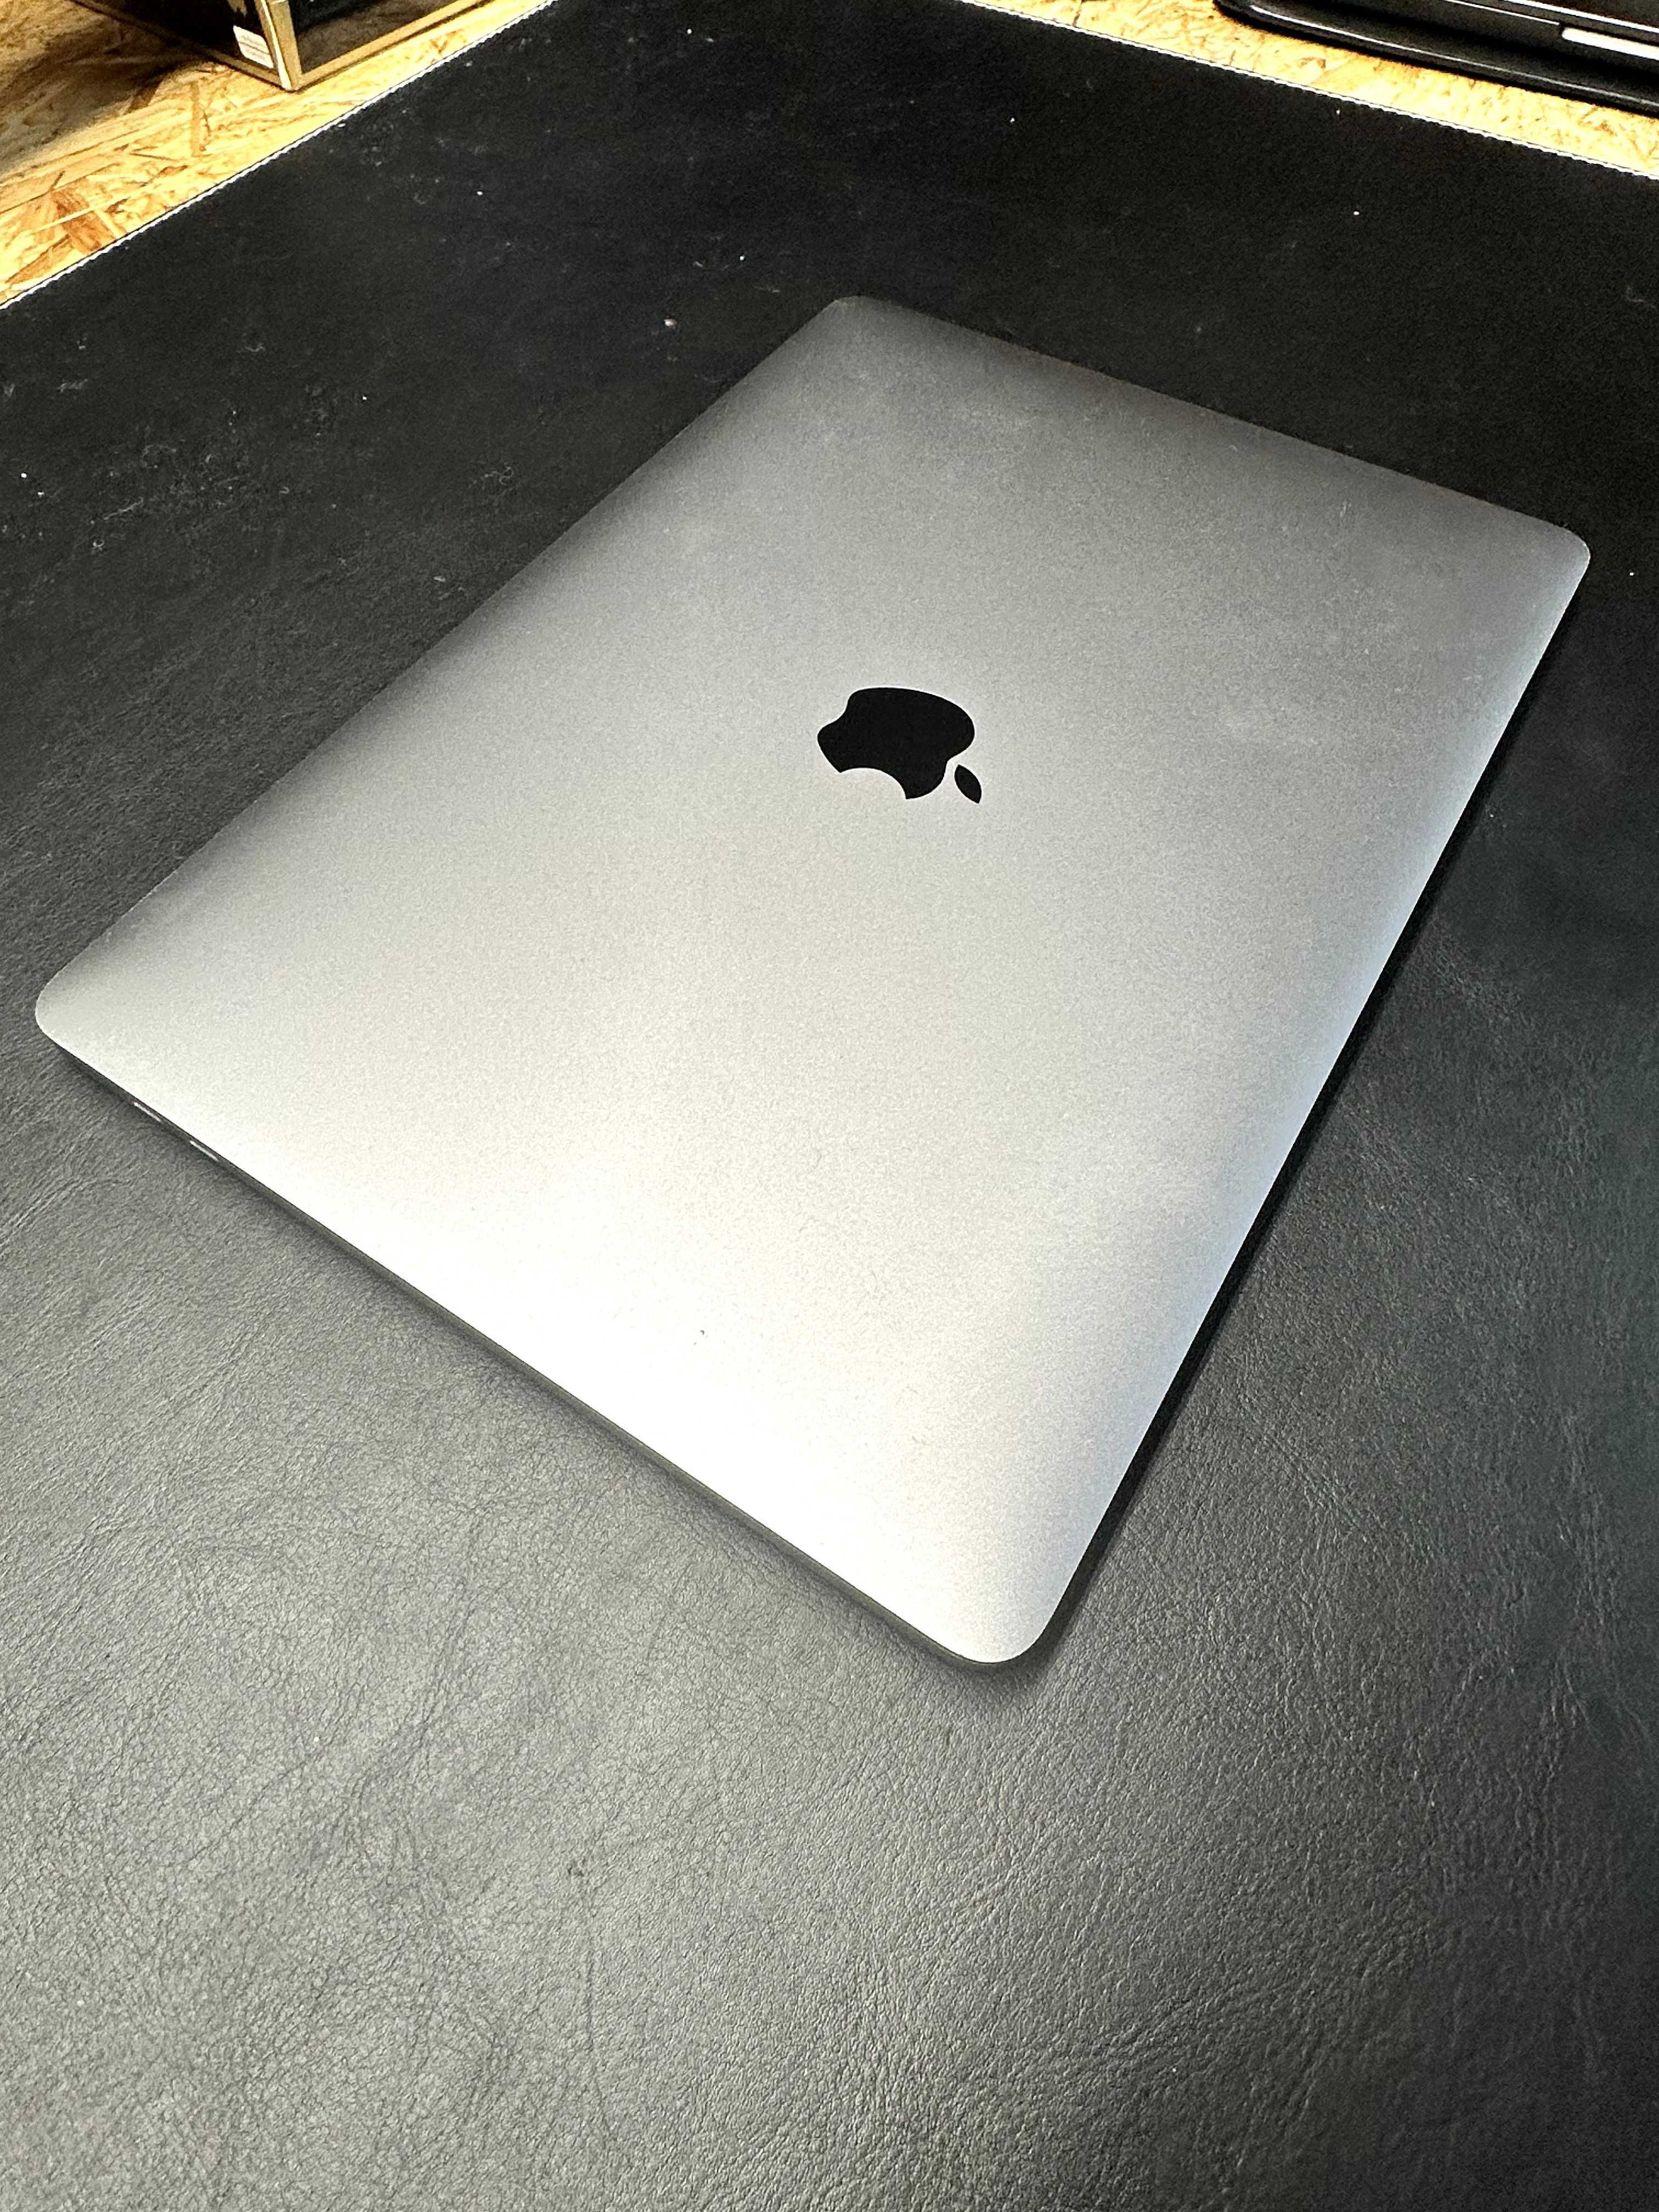 2020 Apple MacBook Pro 13 inch, 8GB RAM, 256GB SSD Space Gray